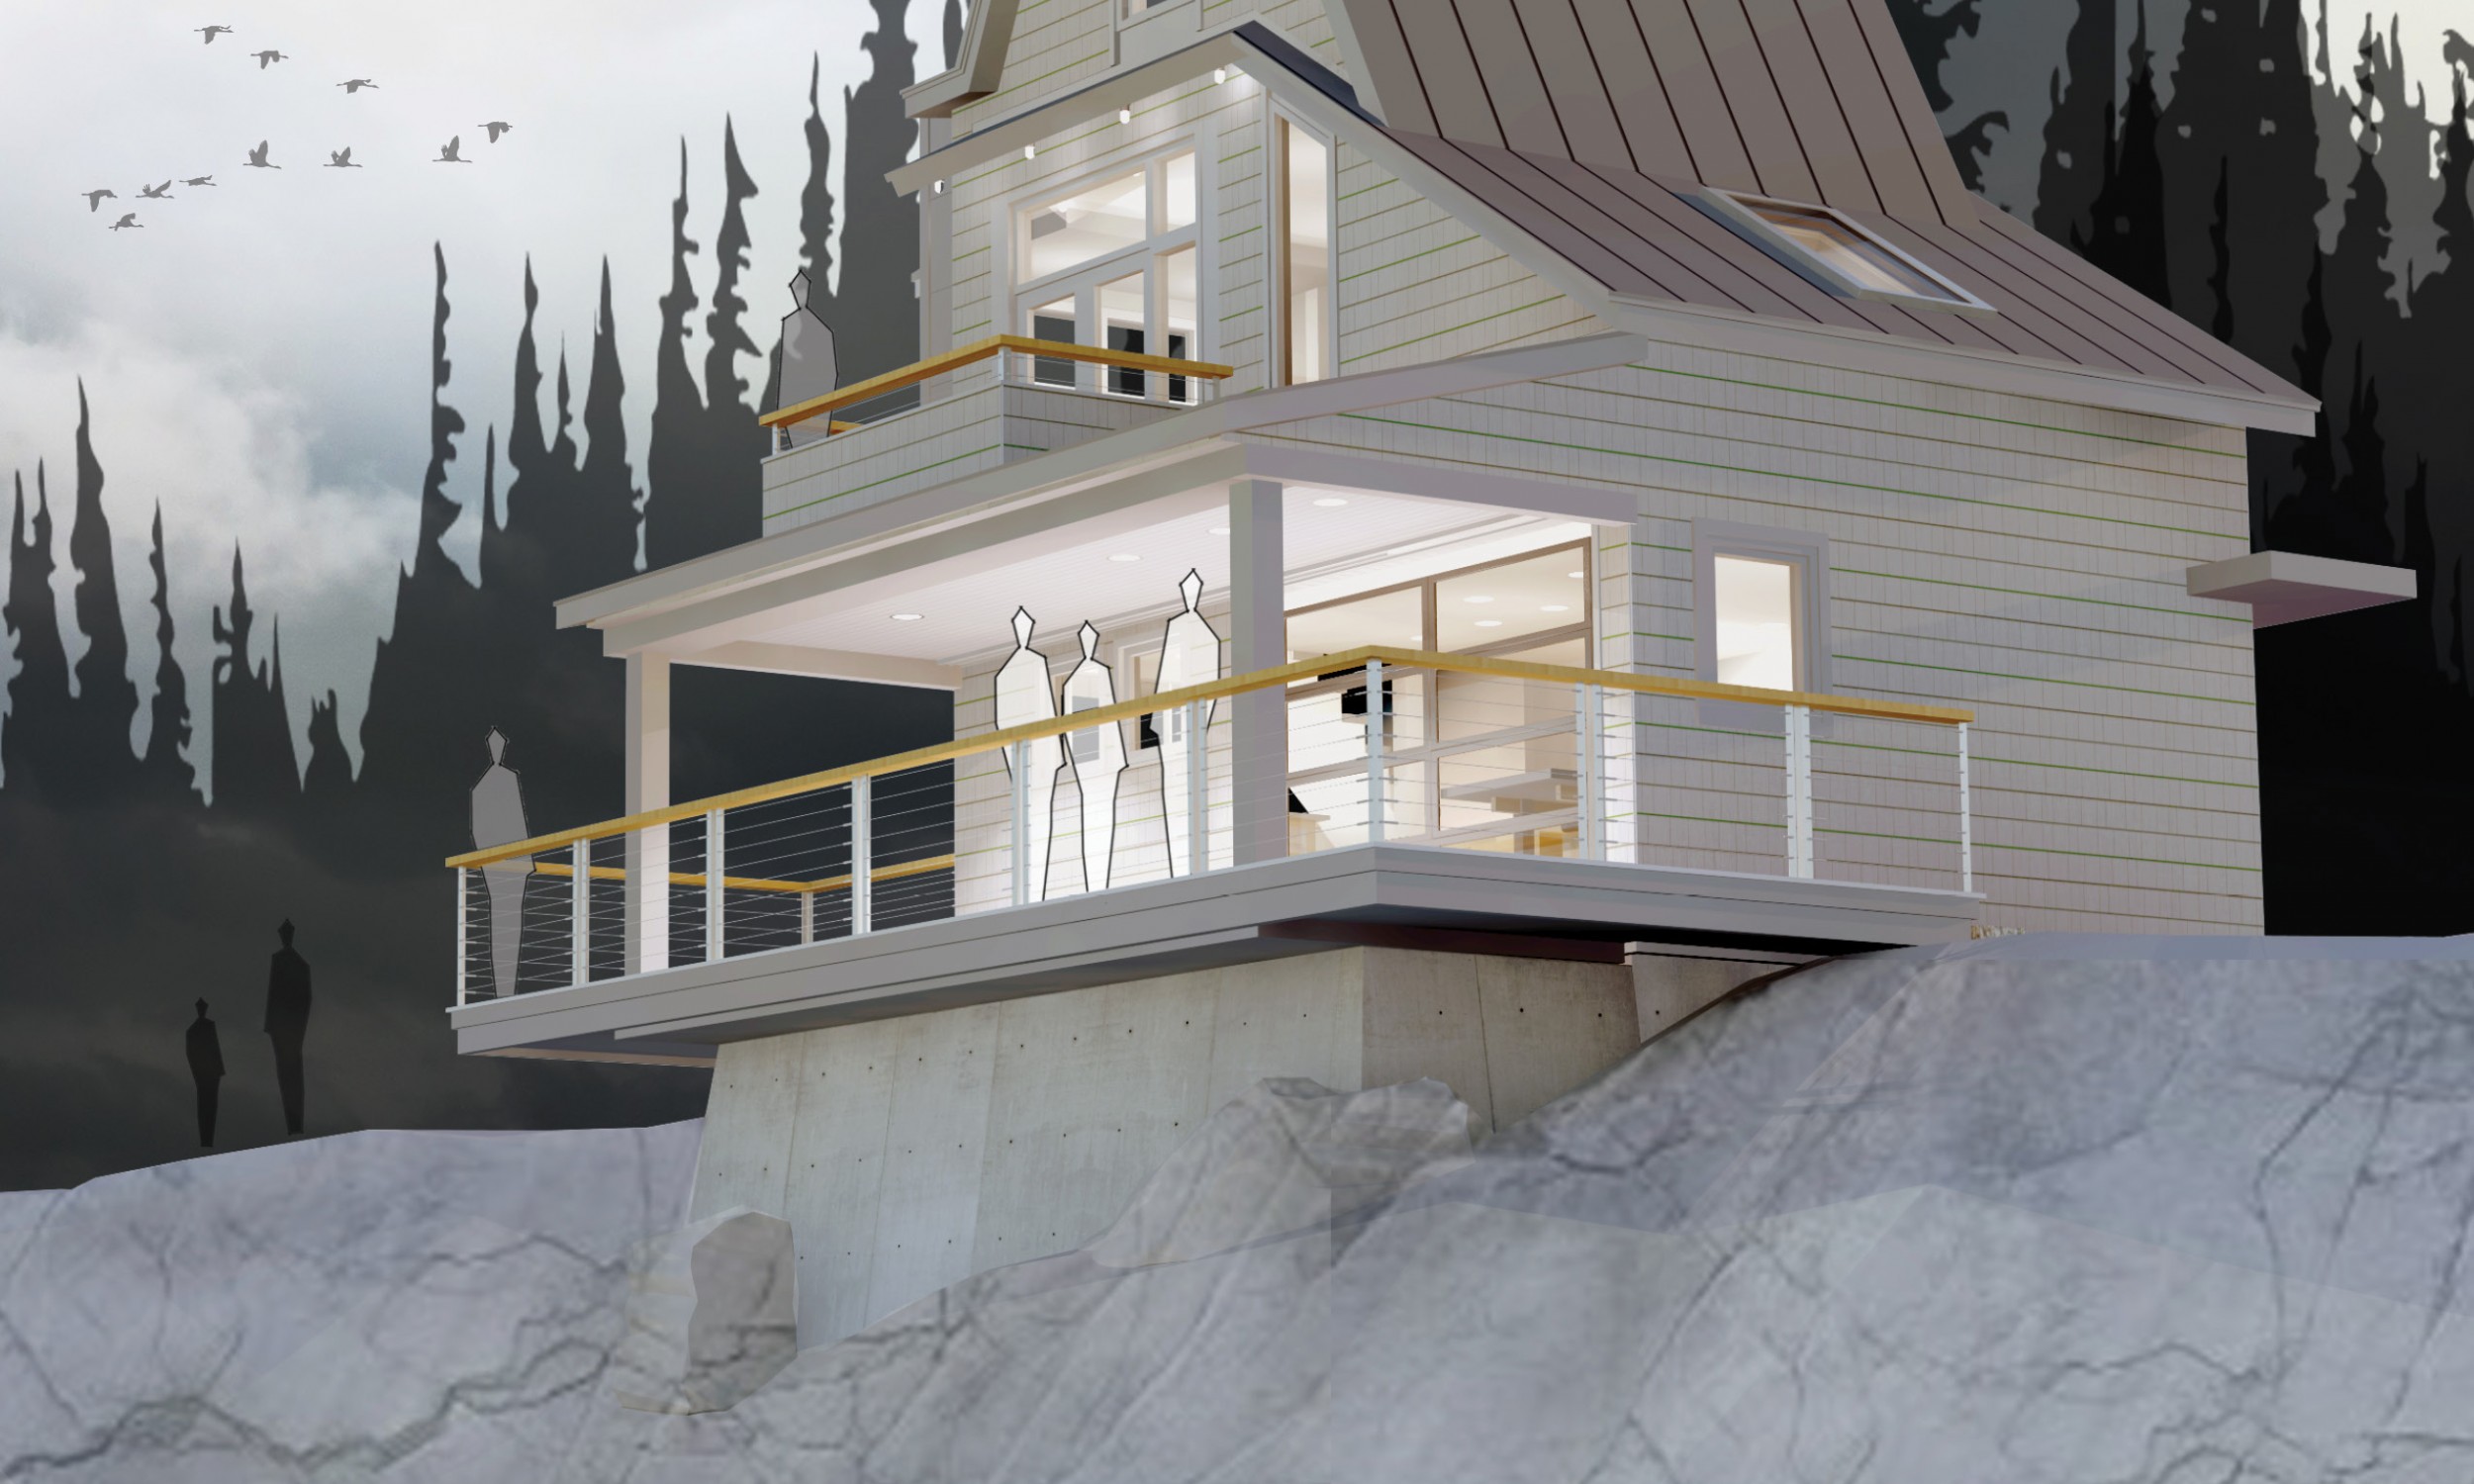 Ocean front rendering, Maine Architect, AIA unbuilt awards winner